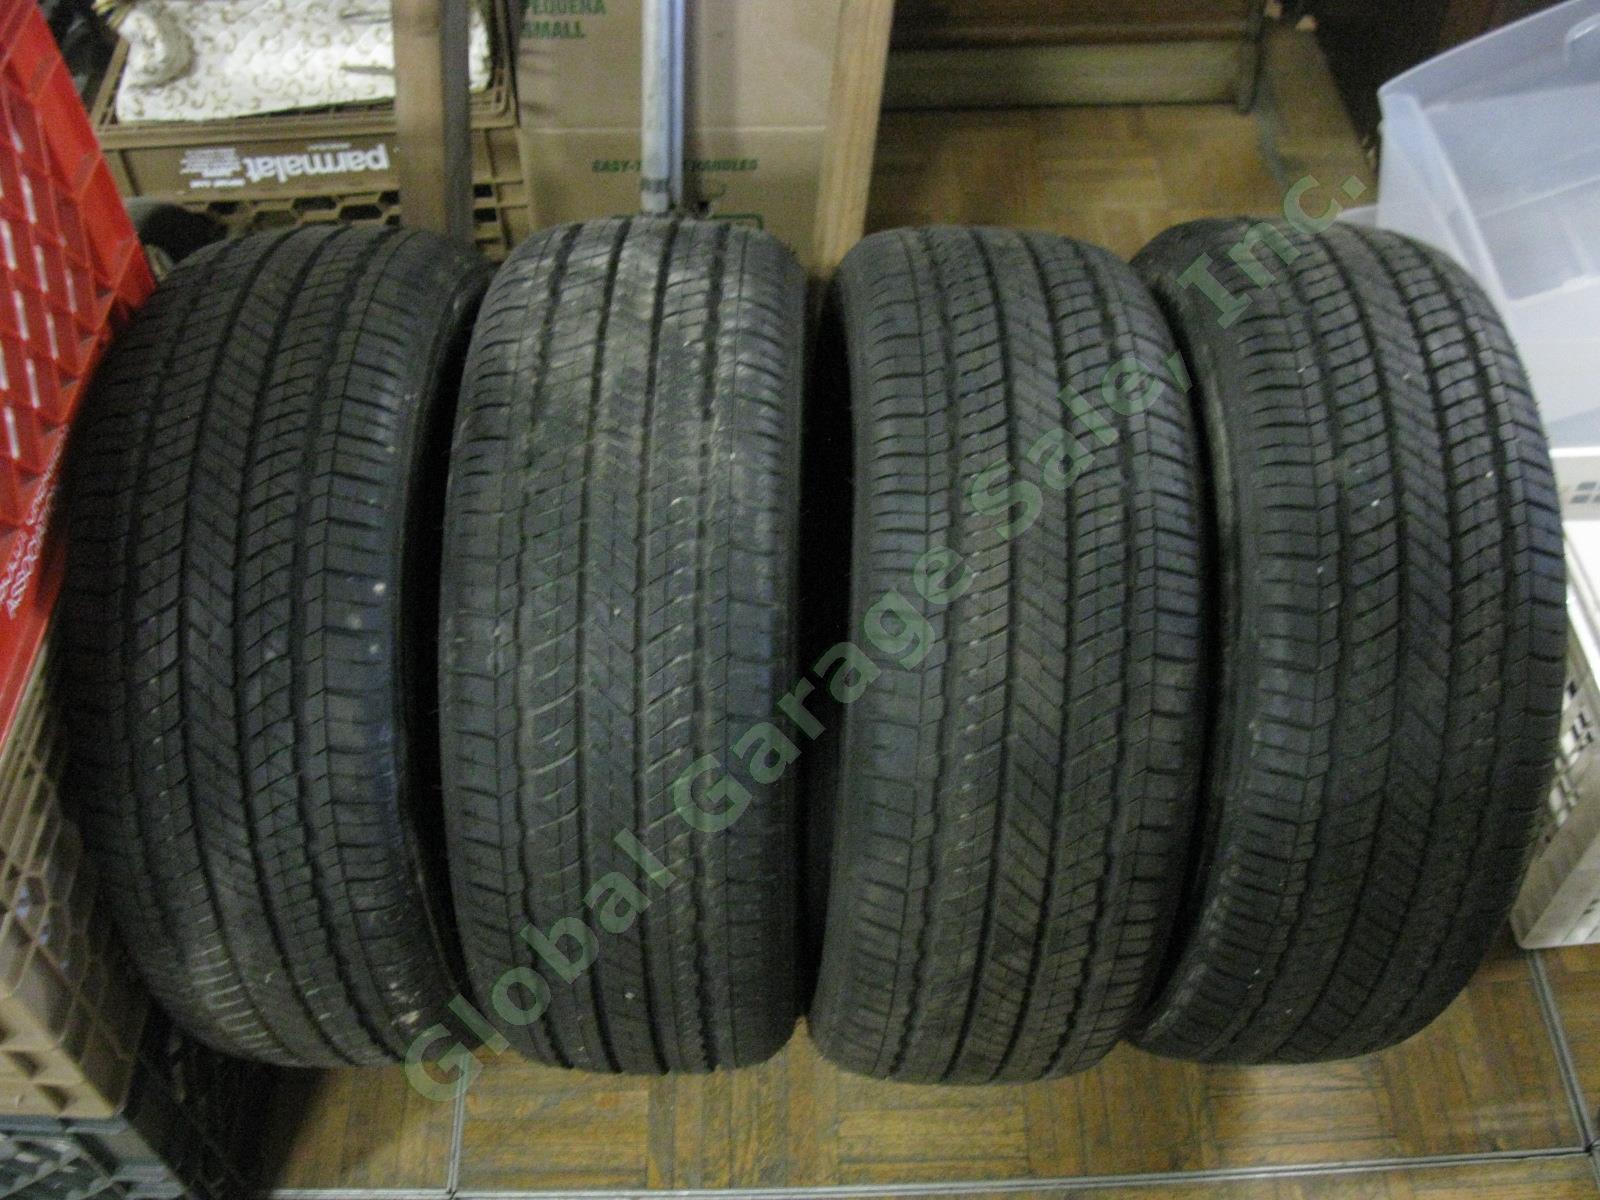 4 Bridgestone Turanza EL400-02 16" P205/55R16 89H M+S RFT Tires Set ~200 Miles!! 1